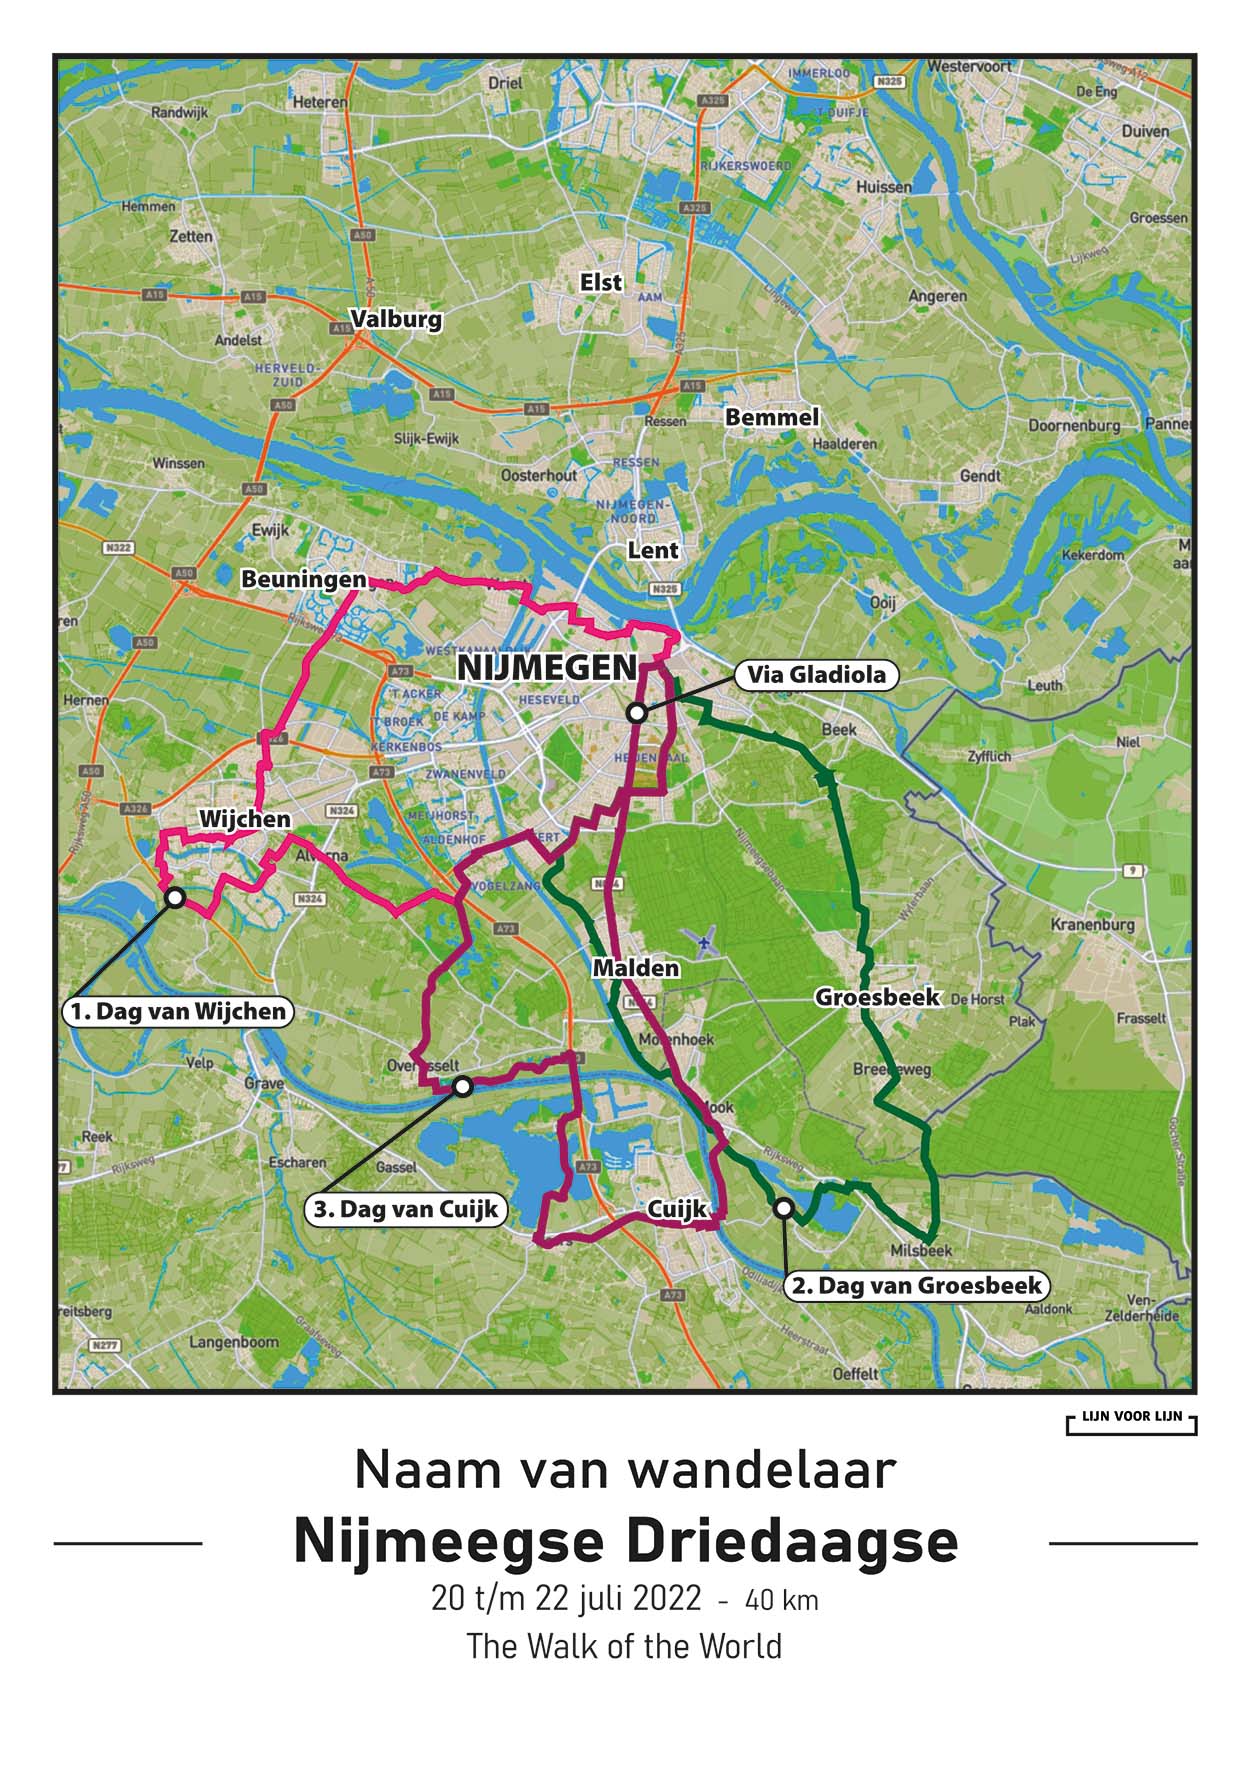 Nijmeegse Driedaagse, 40km, 2022